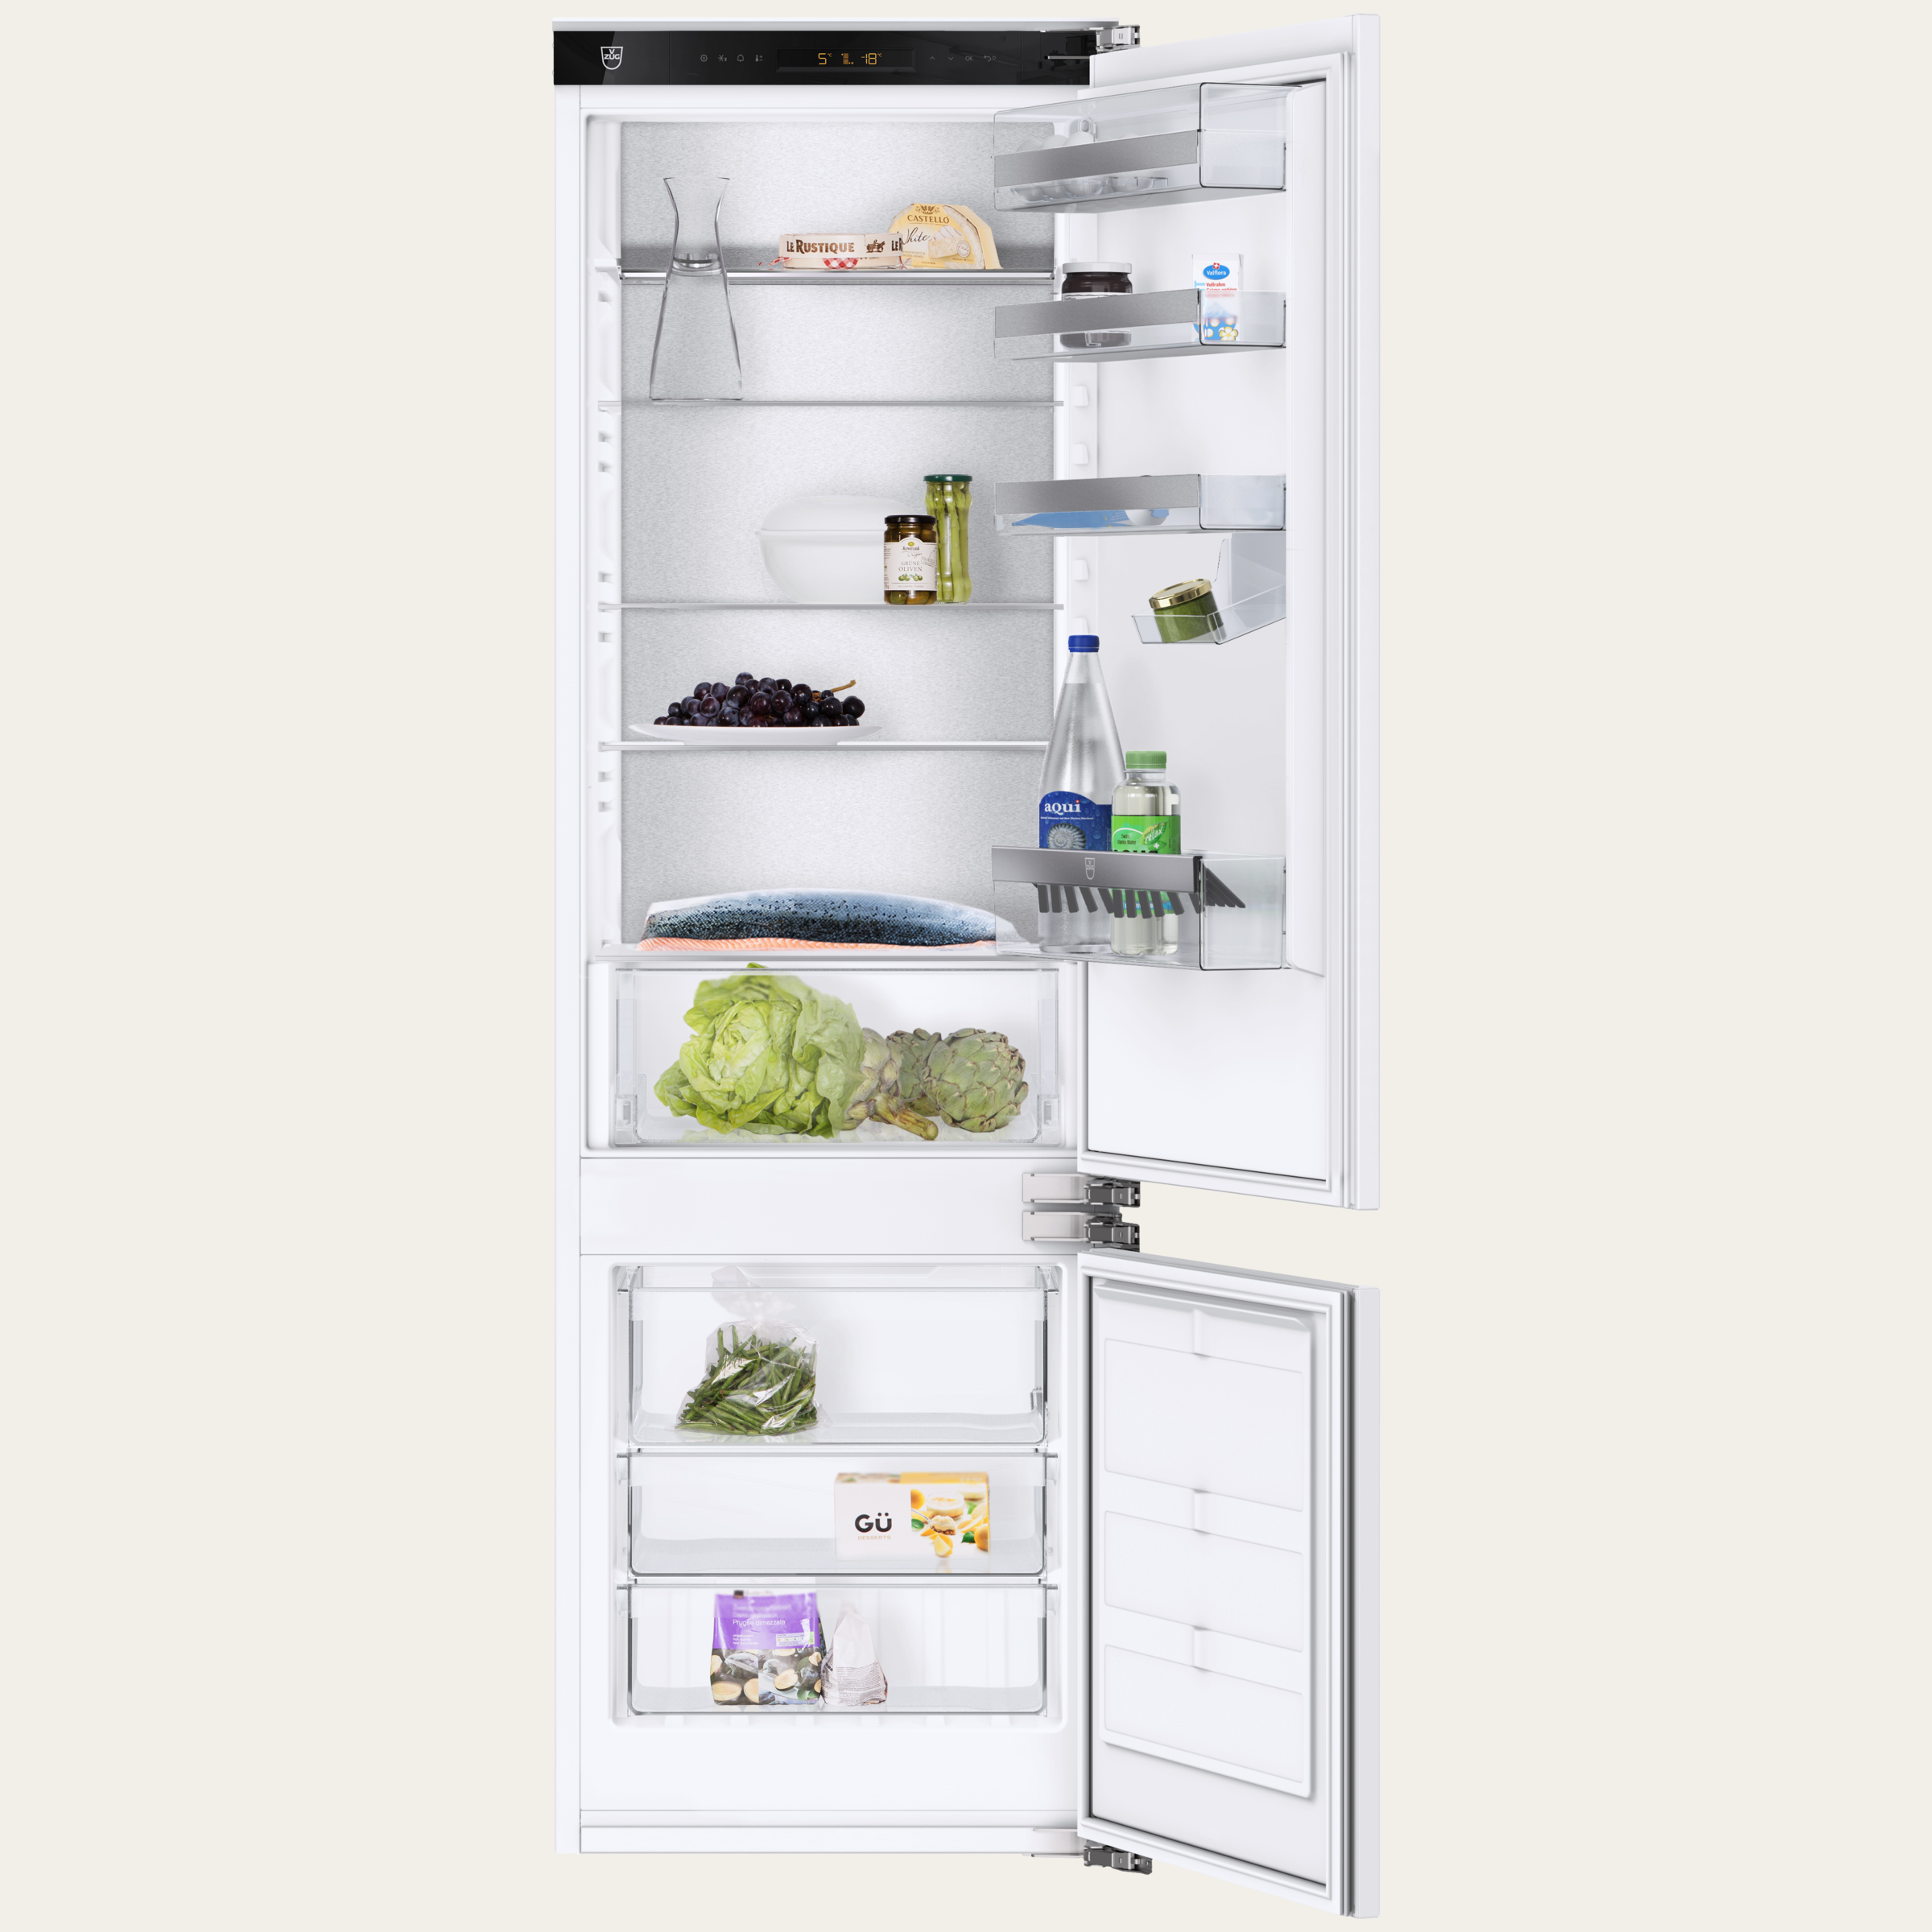 V-ZUG Refrigerator/freezer CombiCooler V4000, Standard width: 60 cm, Standard height: 177.8 cm, Fully integratable, Door hinge: Left, Energy efficiency rating: A+++, TouchControl, NoFrost